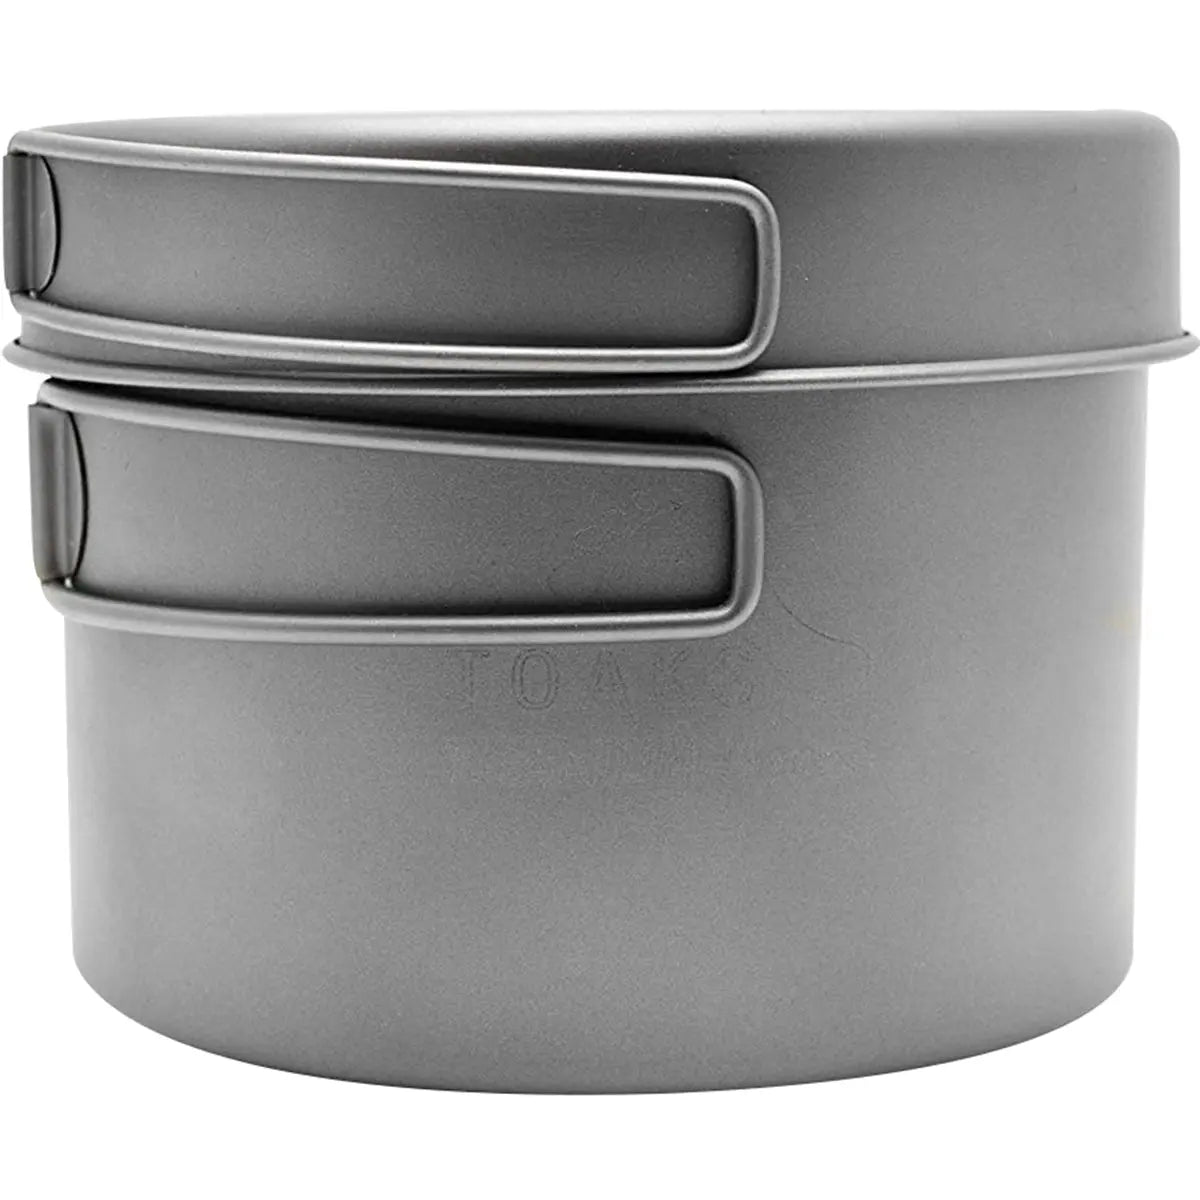 TOAKS Titanium Outdoor Camping Cook Pot with Pan and Foldable Handles TOAKS